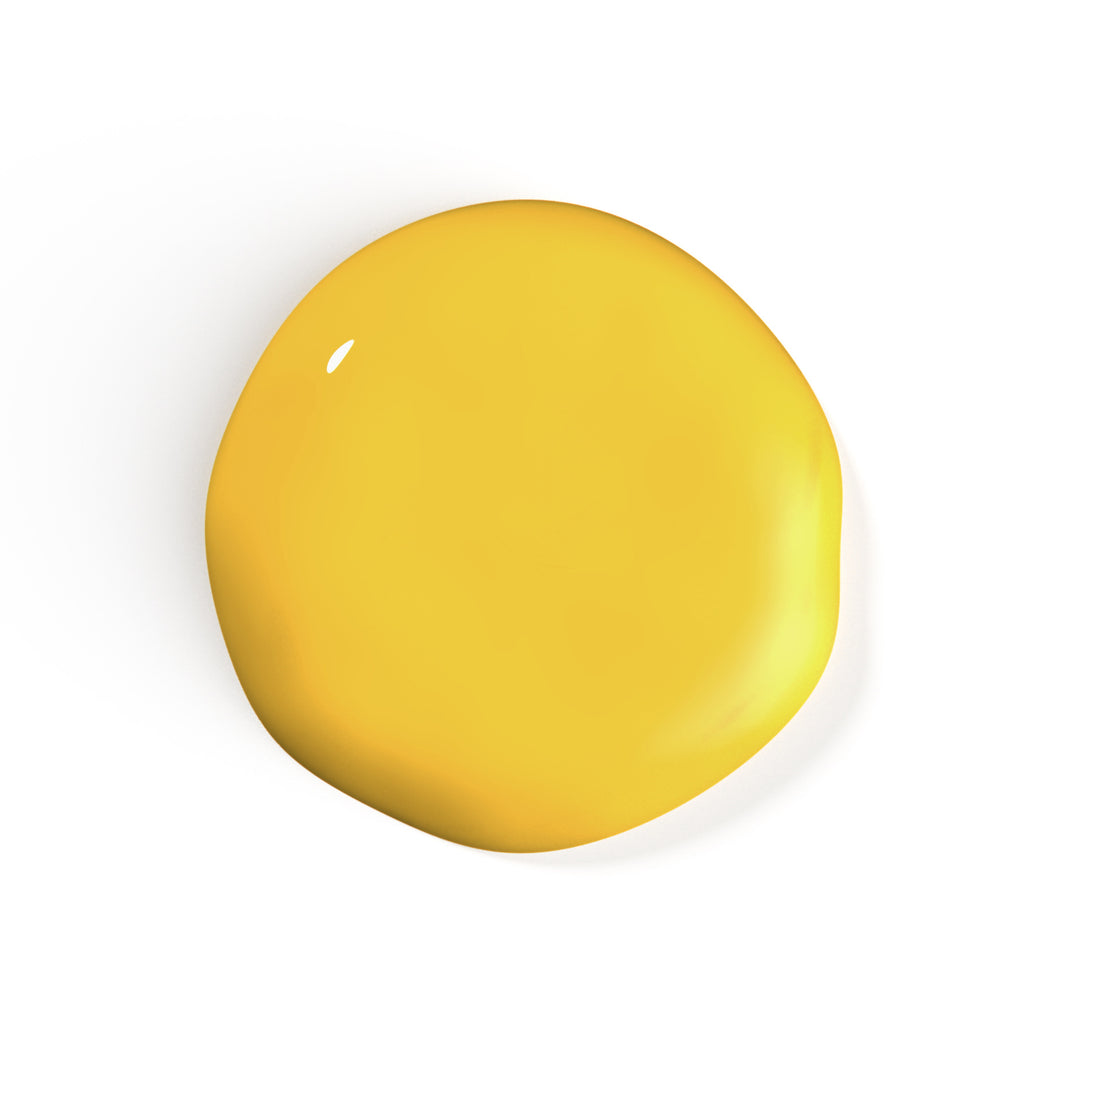 A droplet of Liberation Nails nail polish in a lemon yellow color, Sunroom.